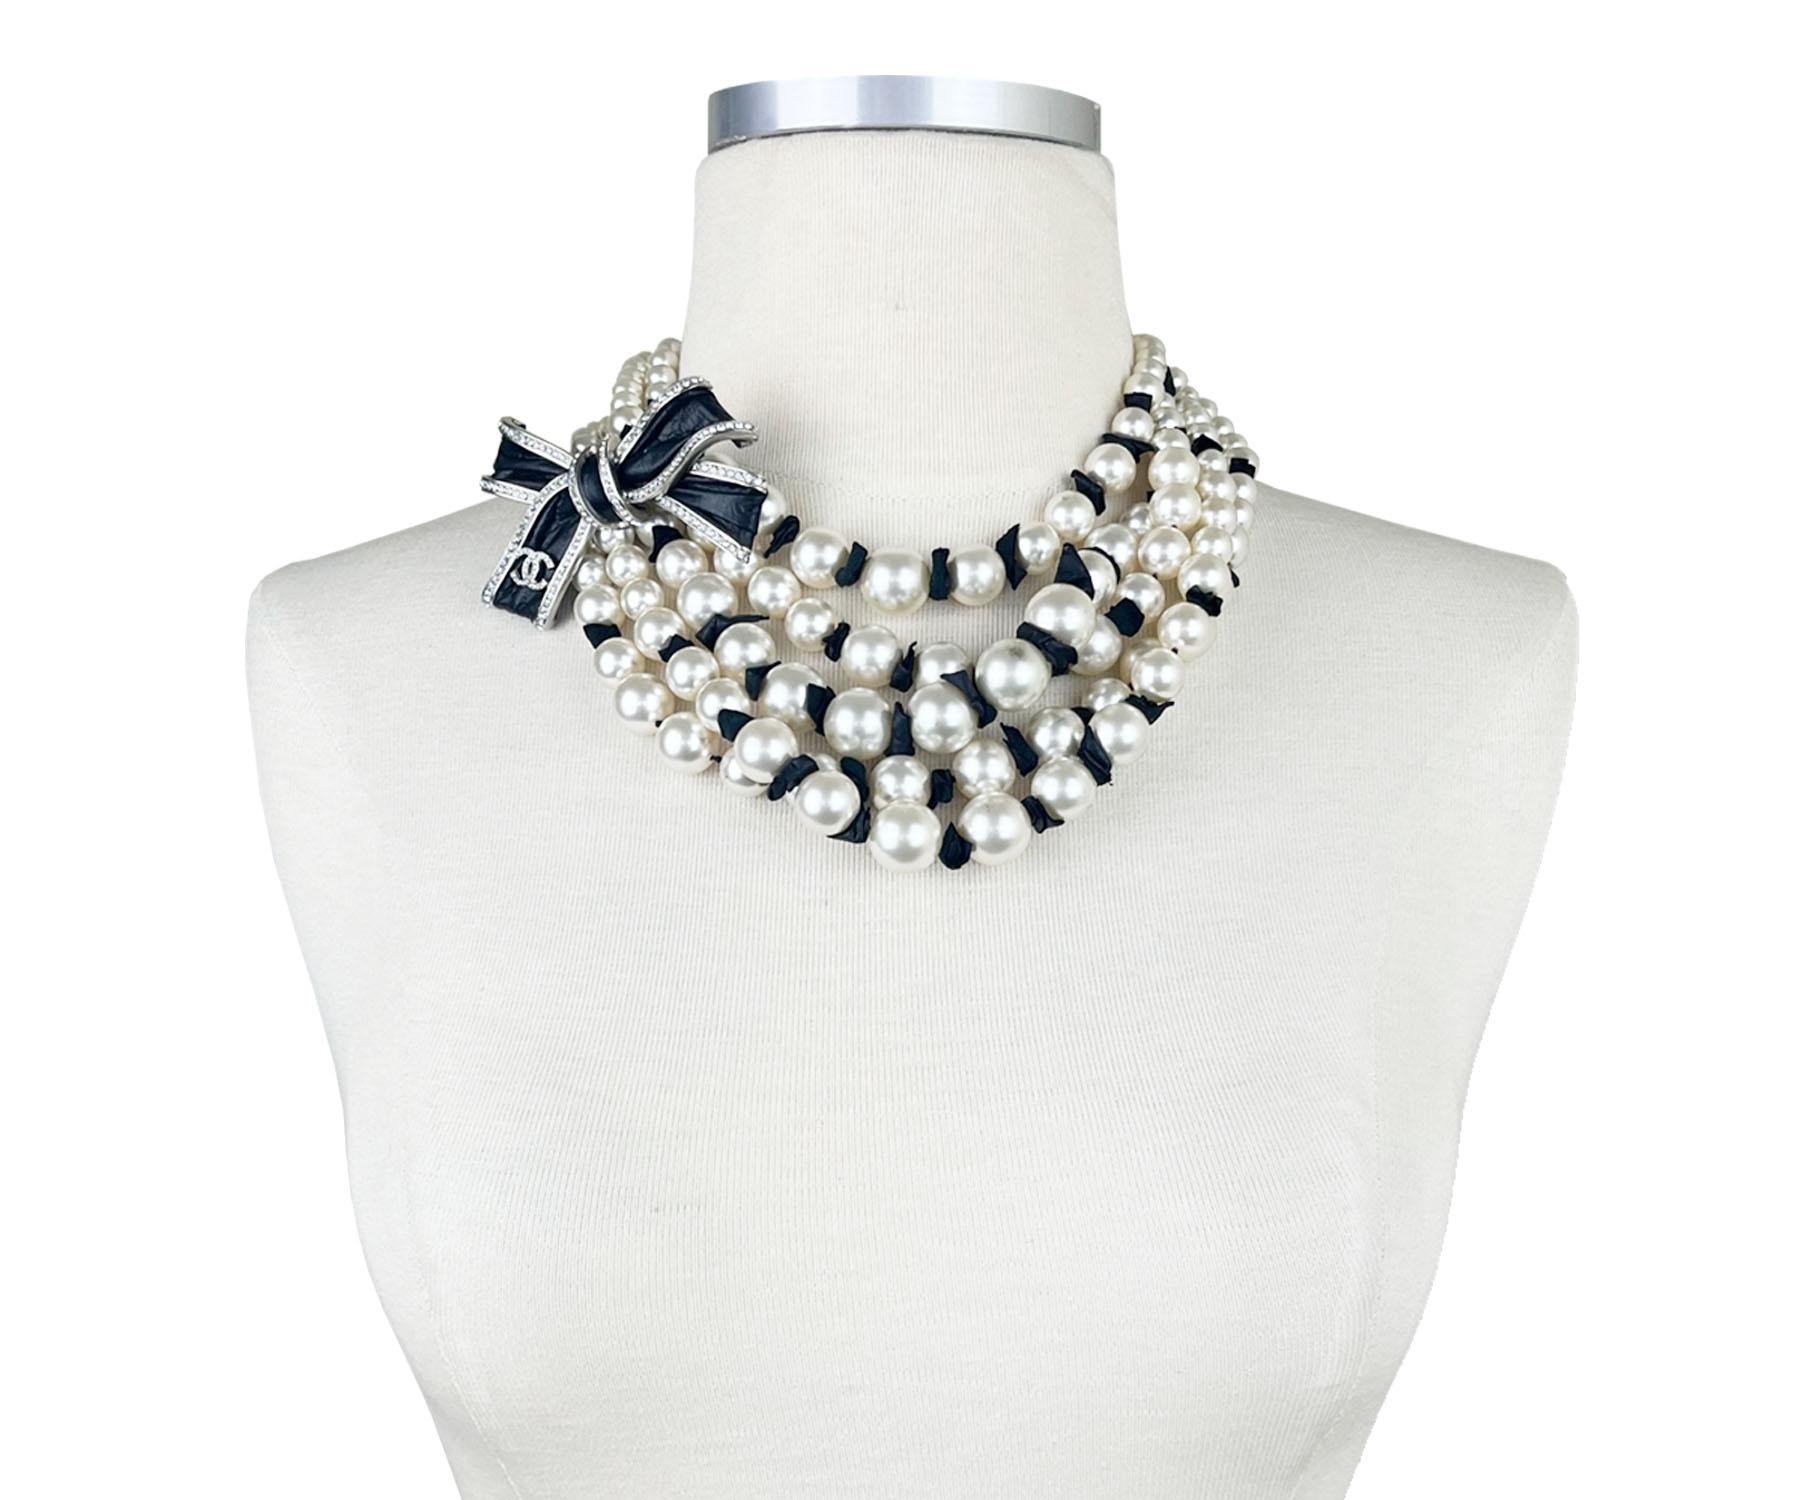 Chanel - Collier court 5 rangs de perles en cuir avec ruban noir Silver CC Bon état - En vente à Pasadena, CA